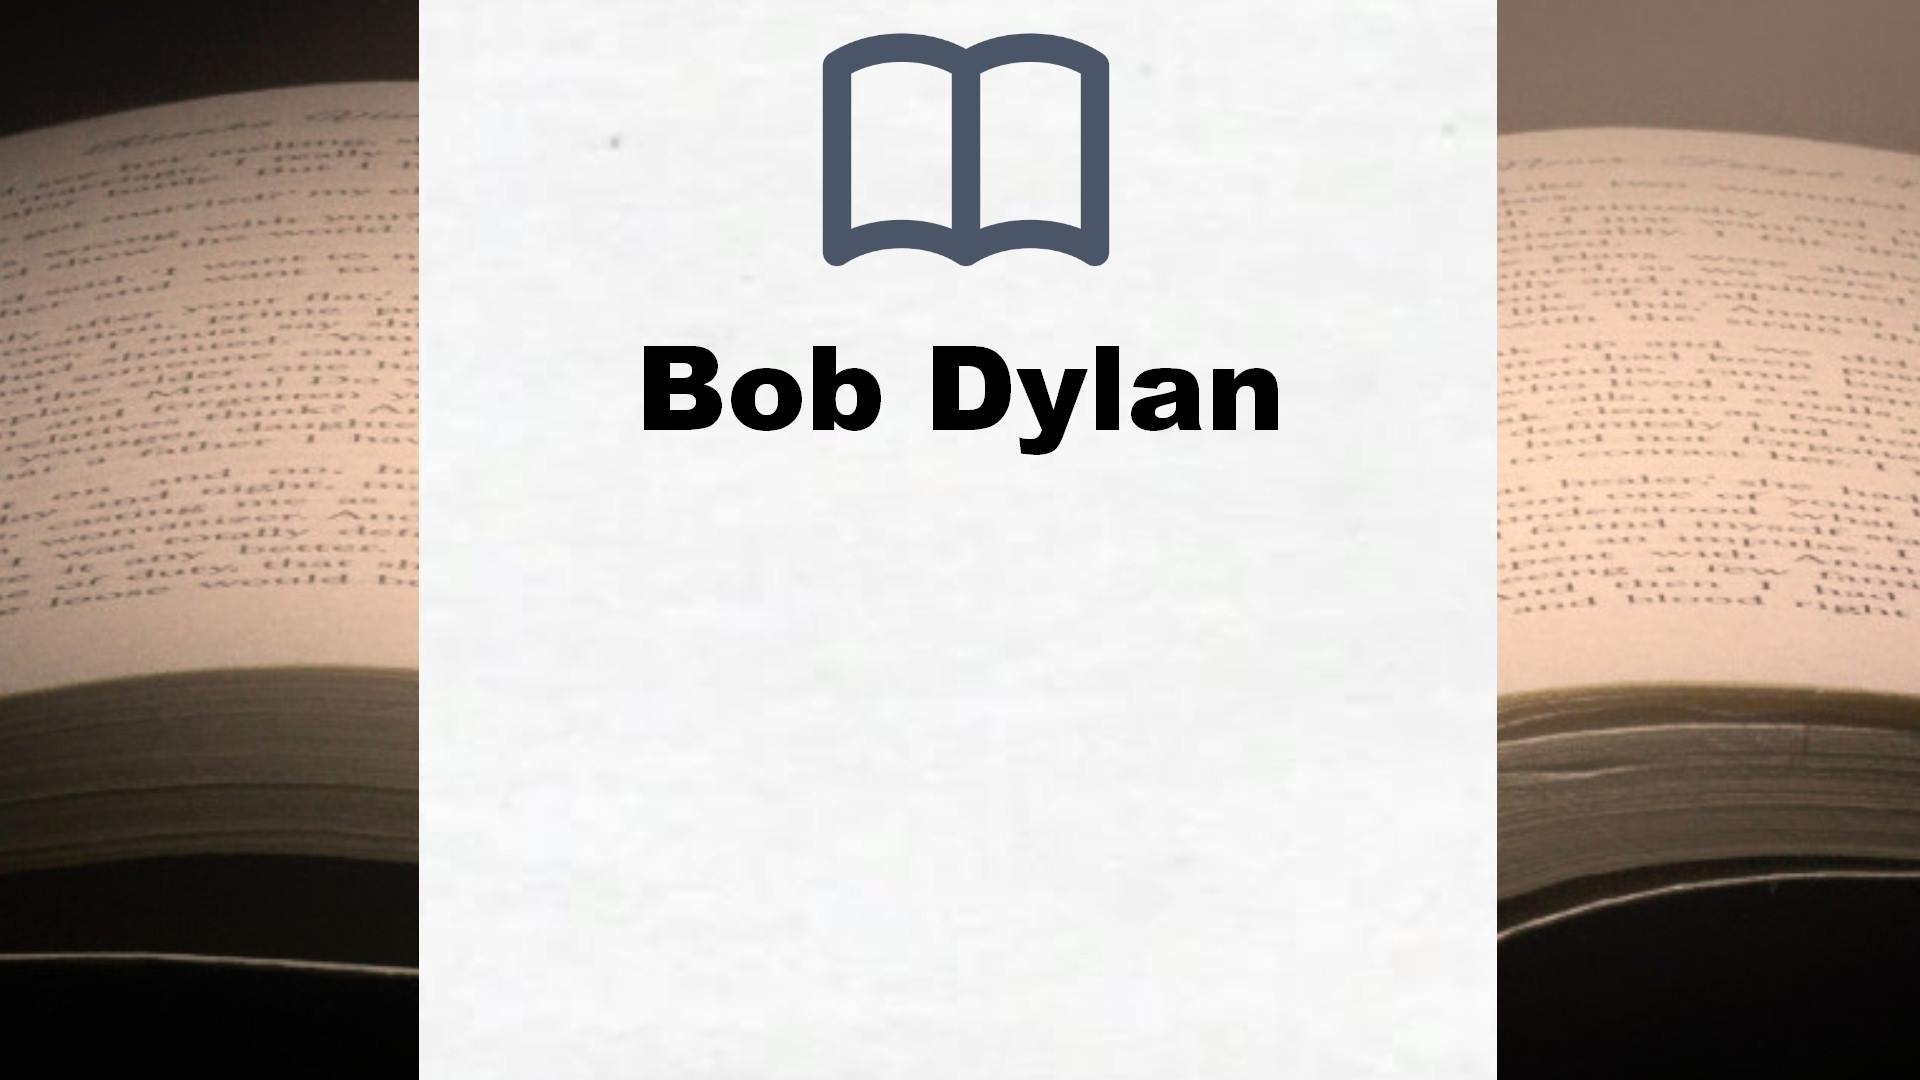 Bücher über Bob Dylan